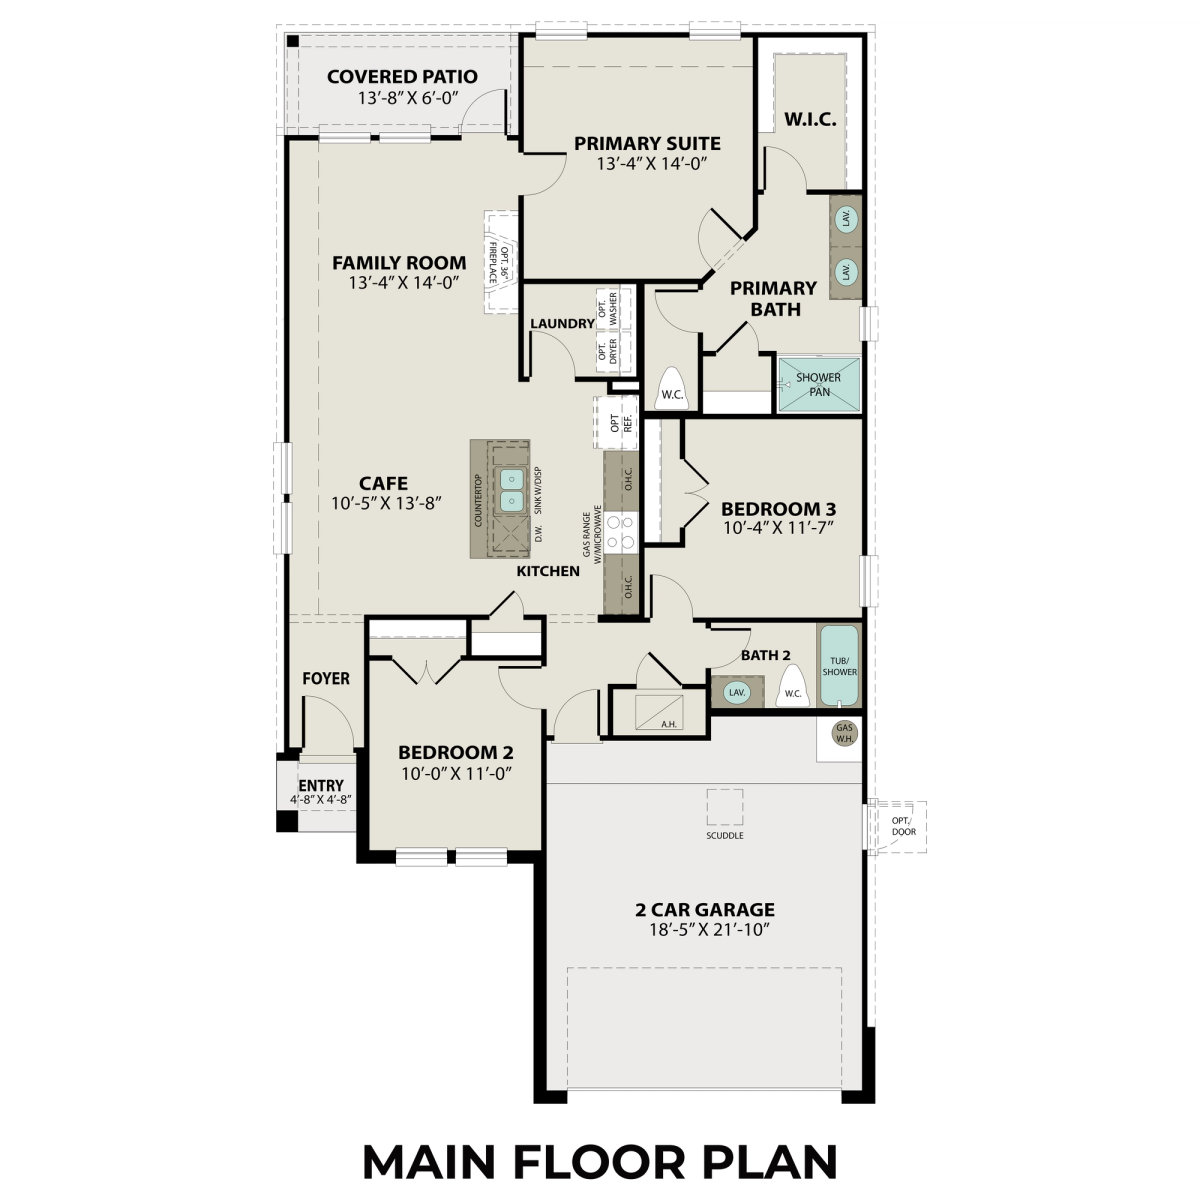 1 - The Costa B floor plan layout for 2561 Malibu Glen Drive in Davidson Homes' Sunterra community.